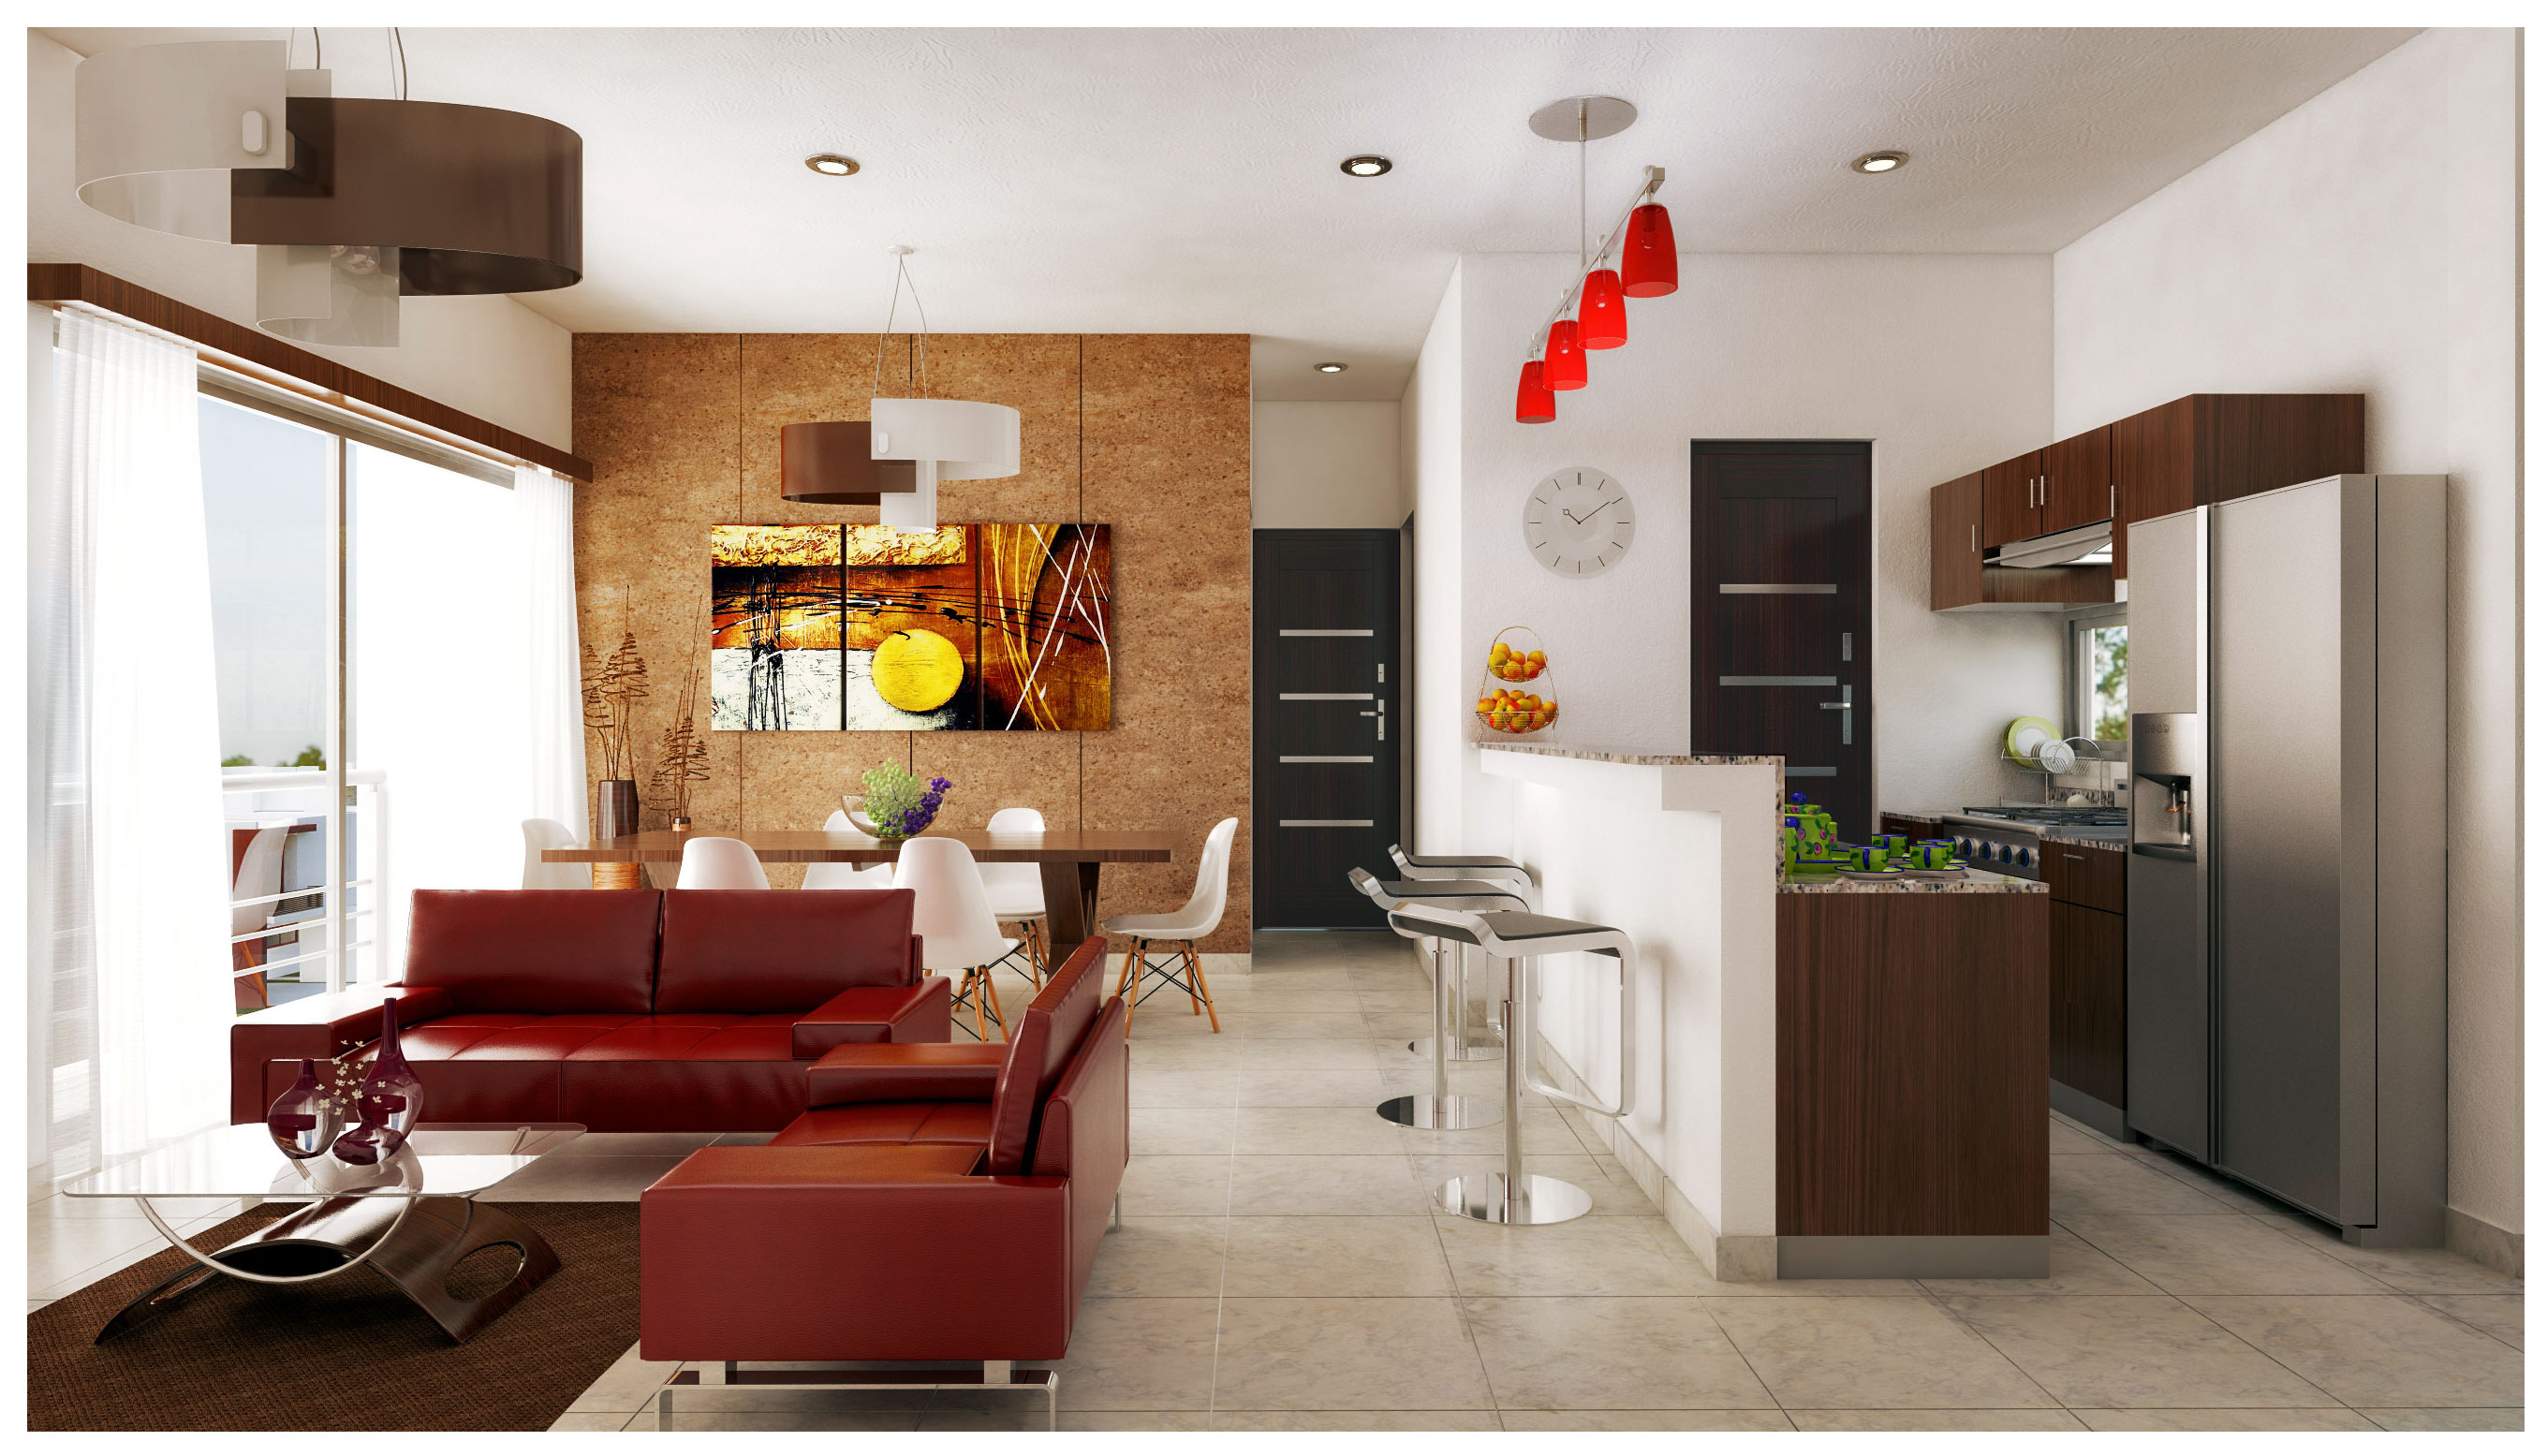 Model Vela - kitchen, living and dining room